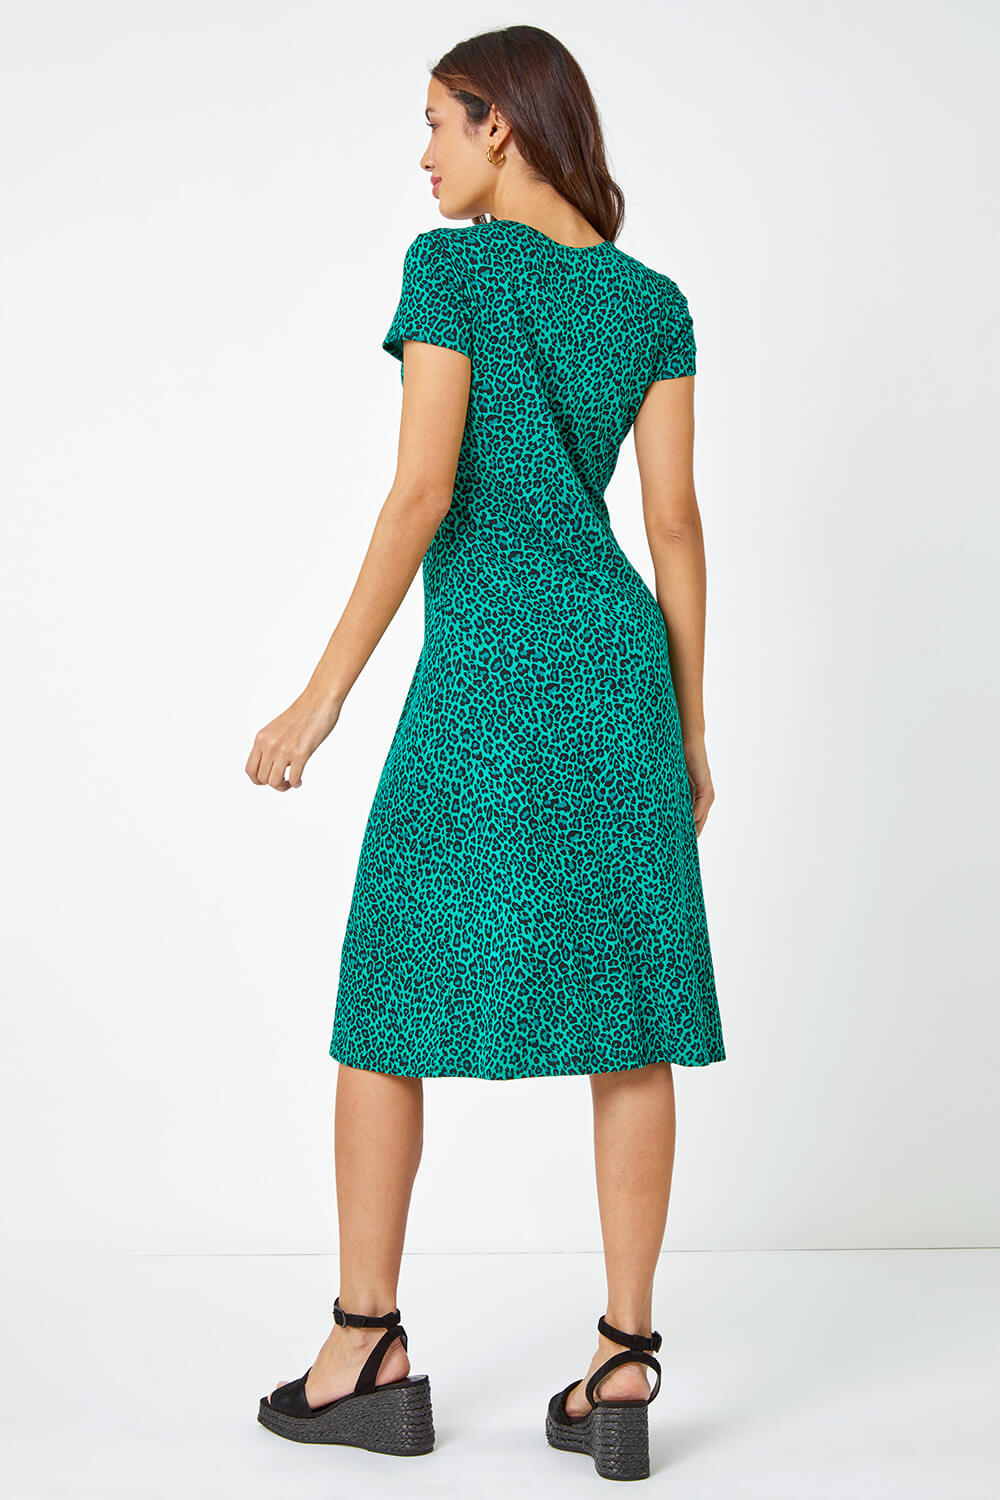 Green Leopard Print Ruched Midi Dress, Image 3 of 5